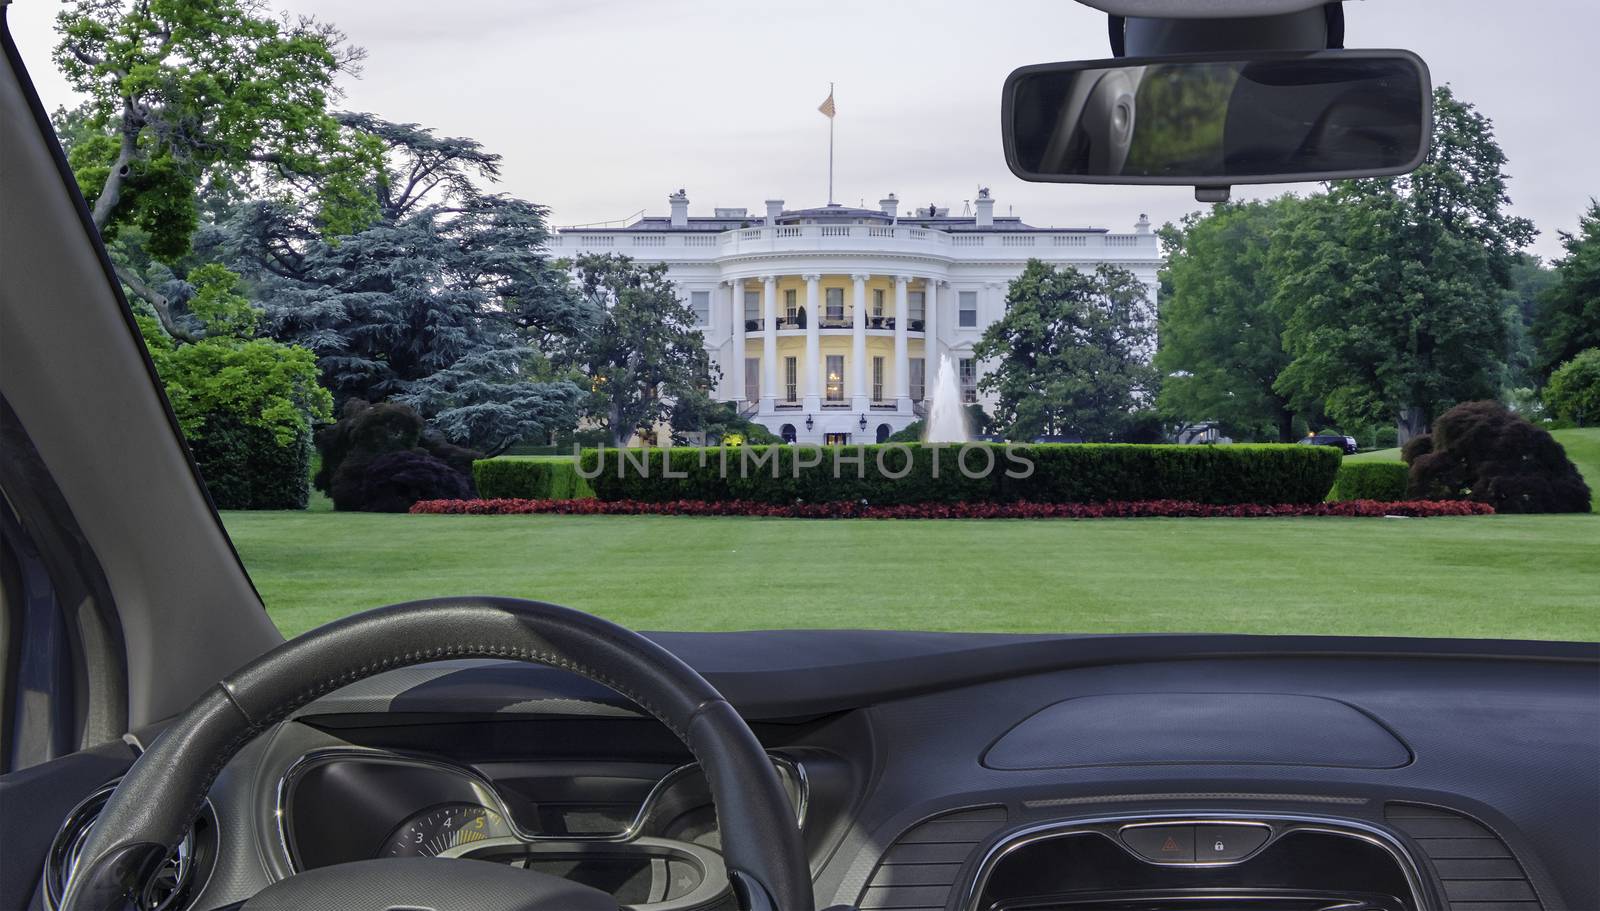 Car windshield view of the White House, Washington DC, USA by marcorubino